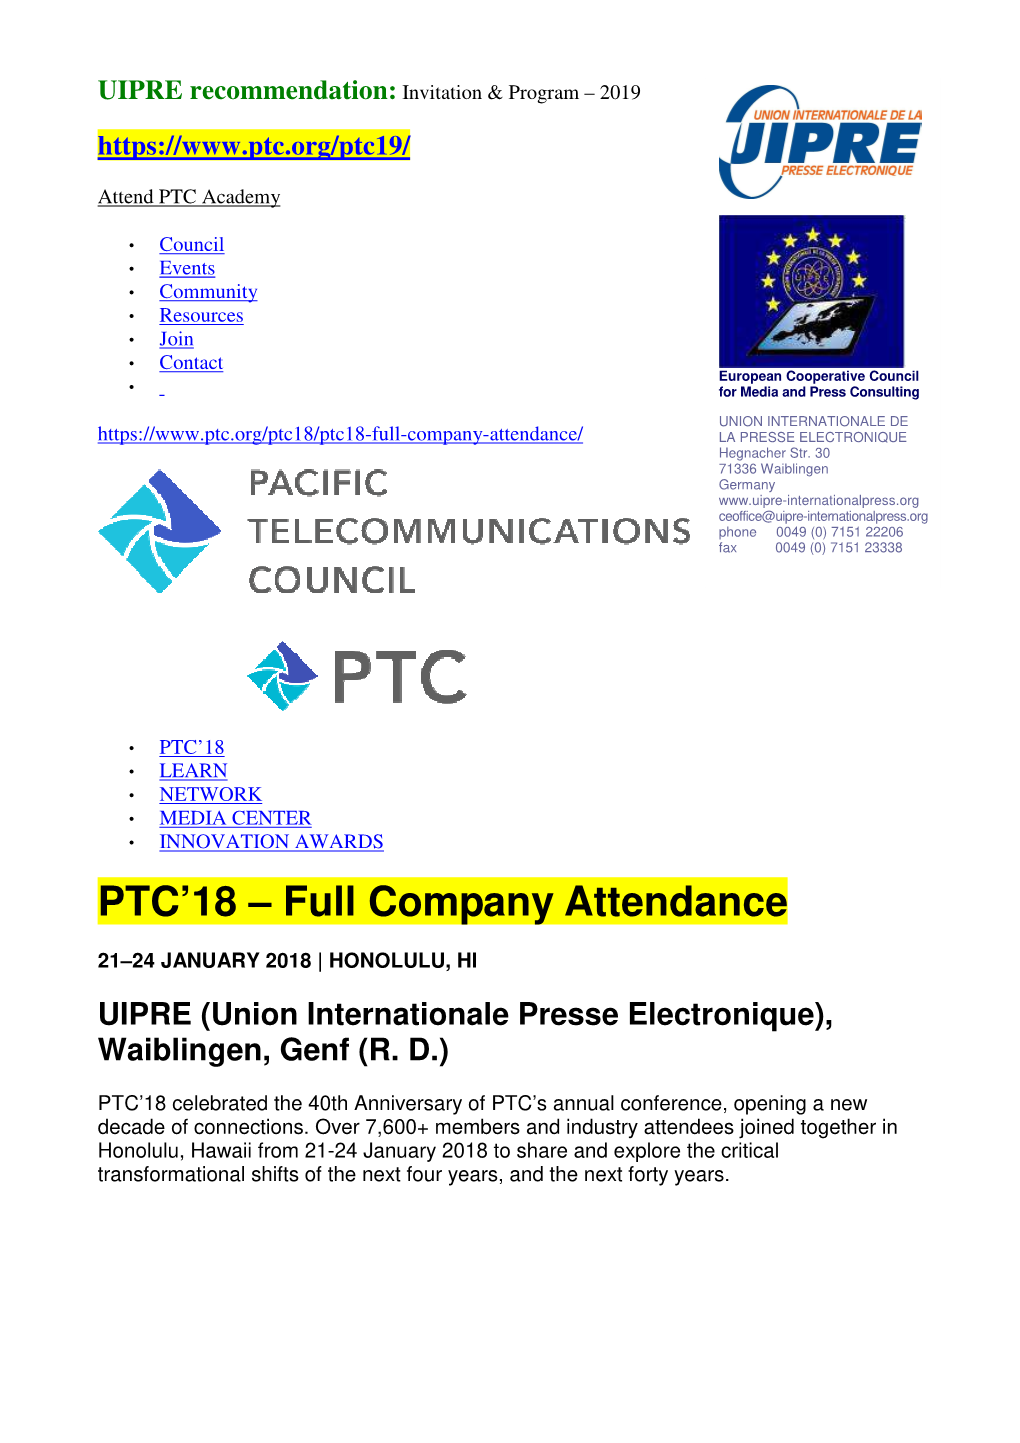 UIPRE Recommendation PTC 2019 Full Company Attendance 2018 25